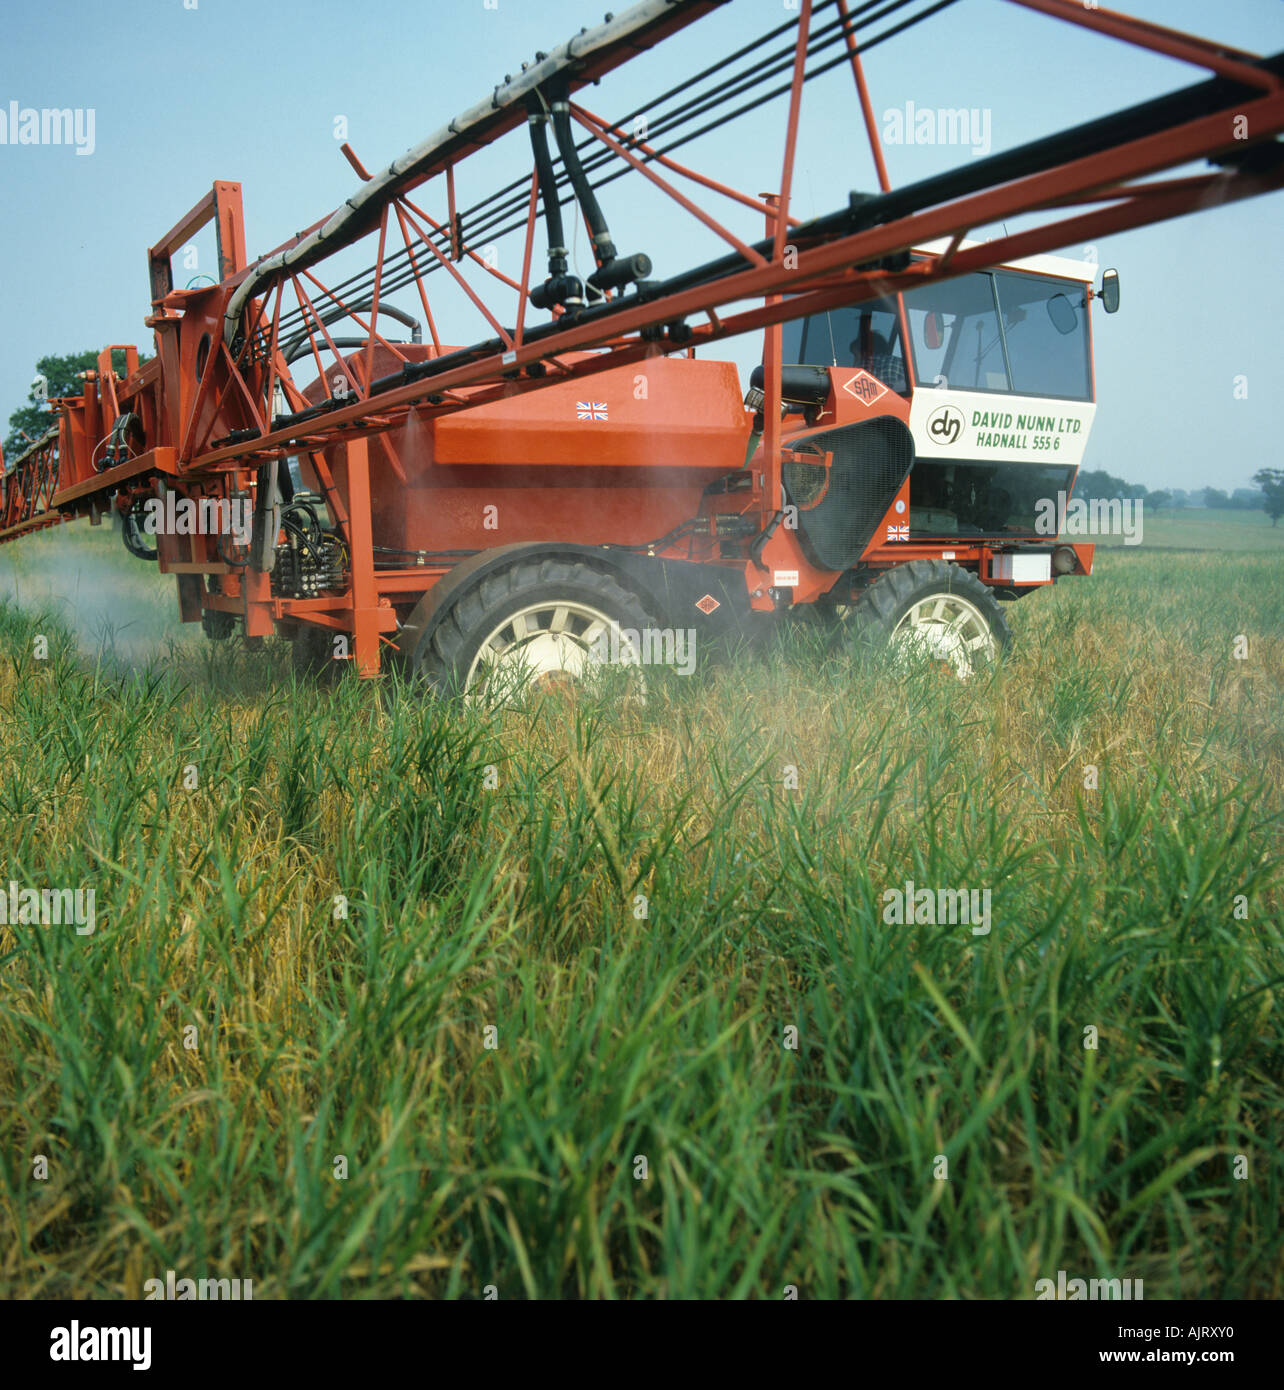 Sam sprayer spraying glyphosate onto wheat crop pre-harvest to control couch grass Stock Photo